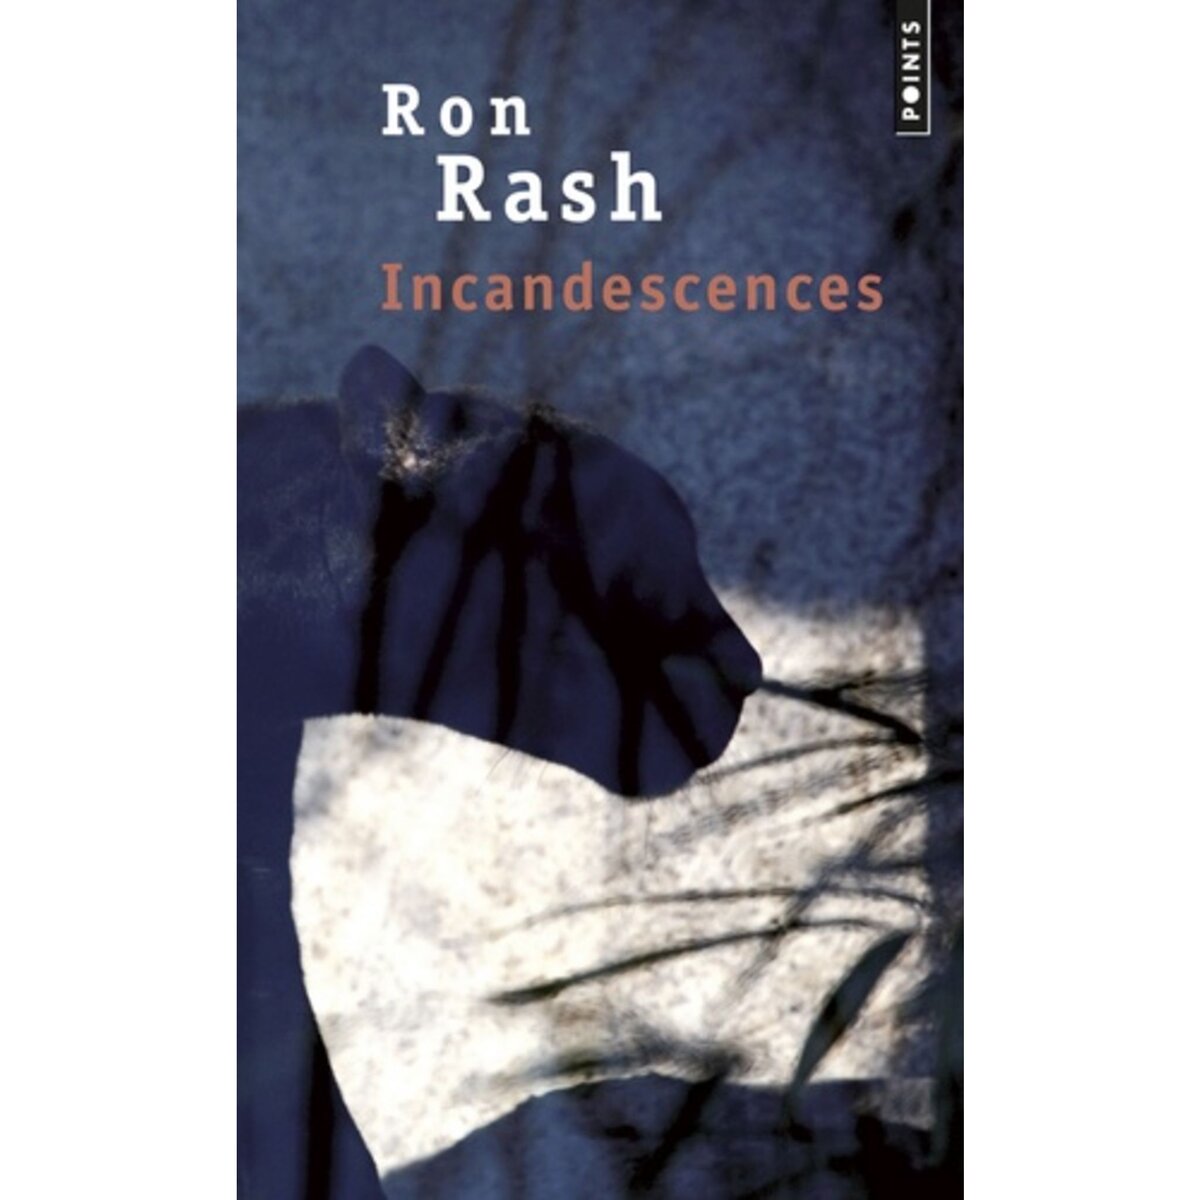  INCANDESCENCES, Rash Ron